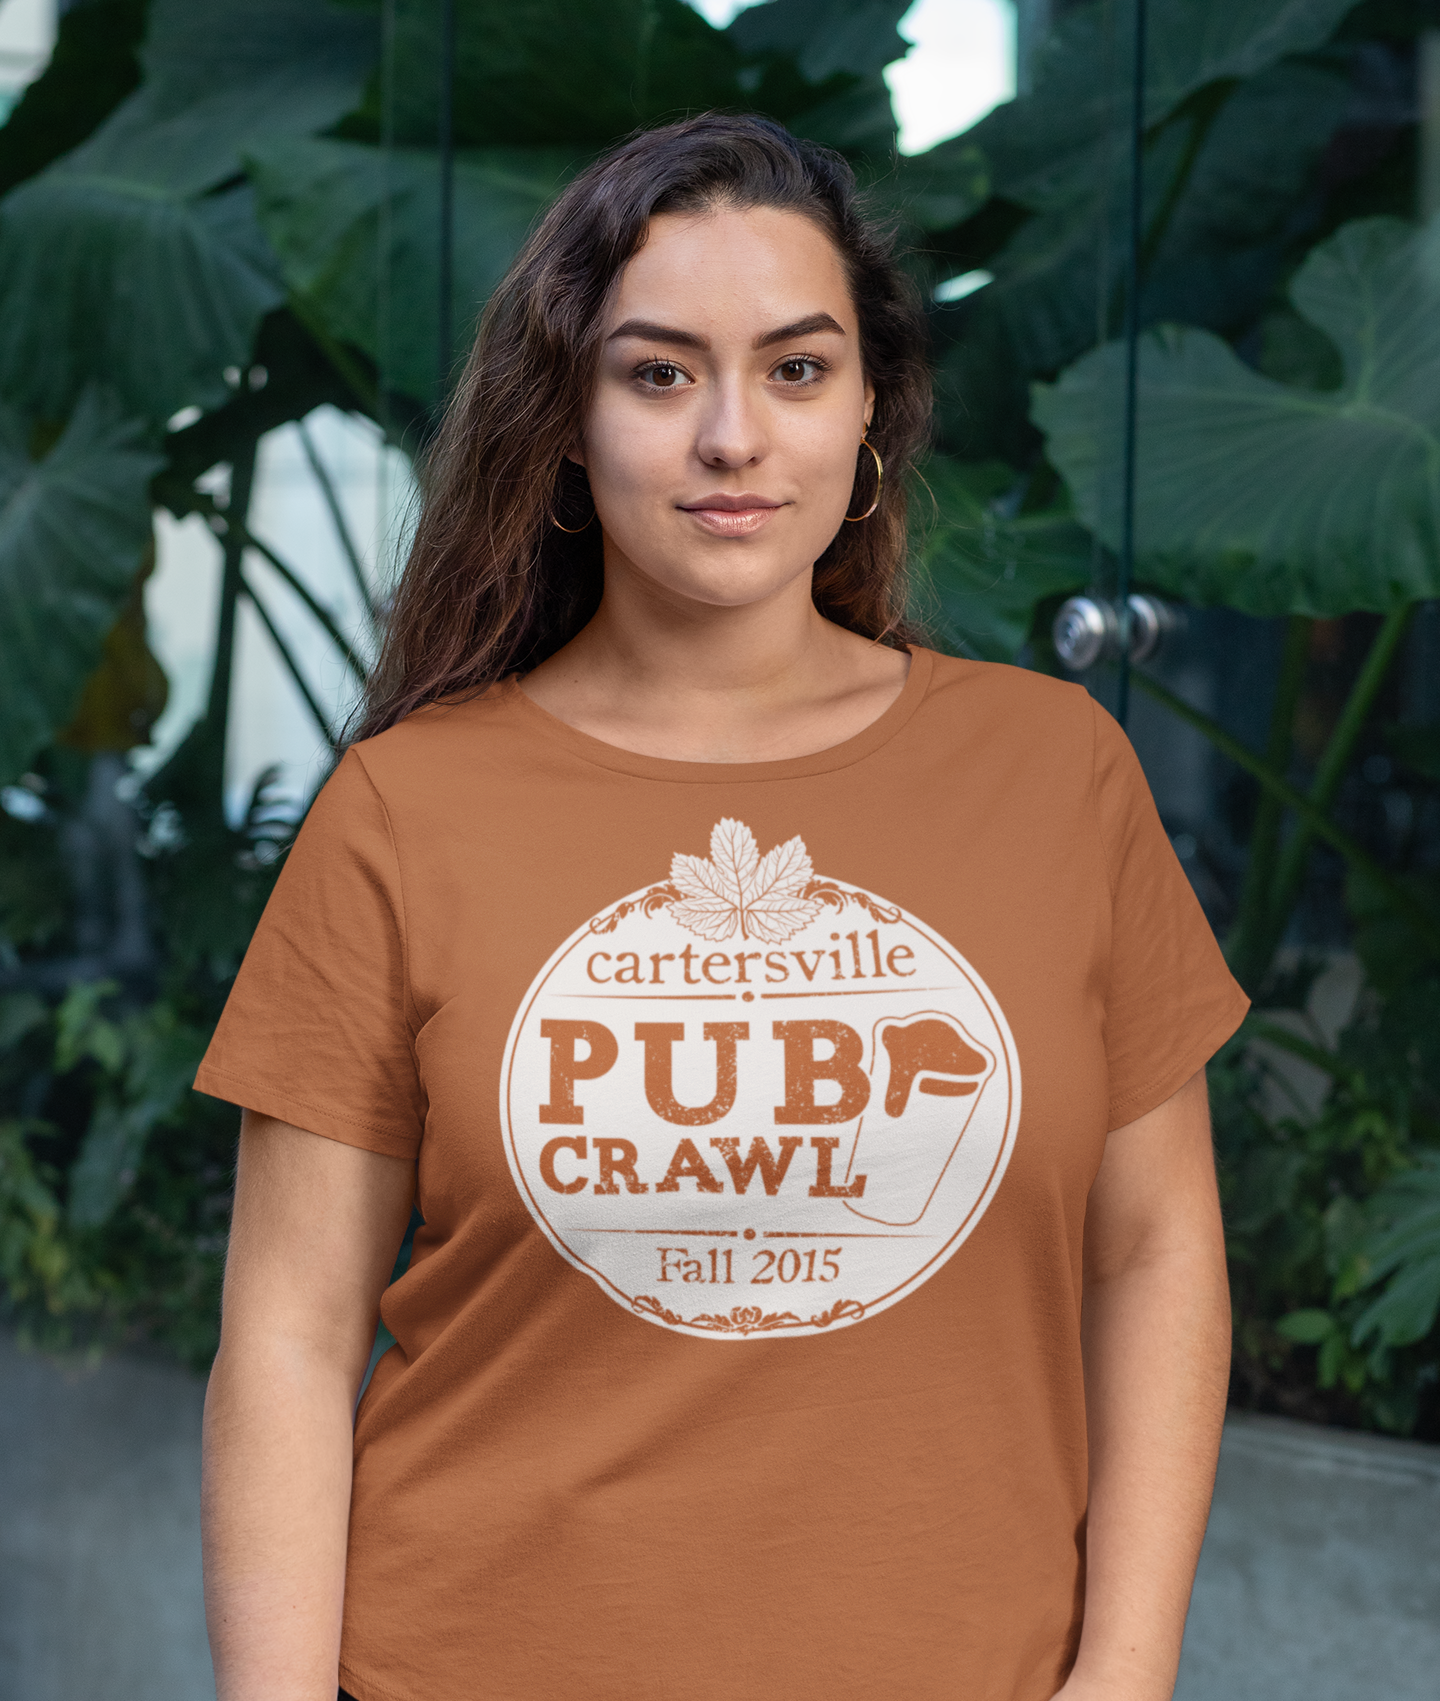 Cartersville Pub Crawl T-shirt